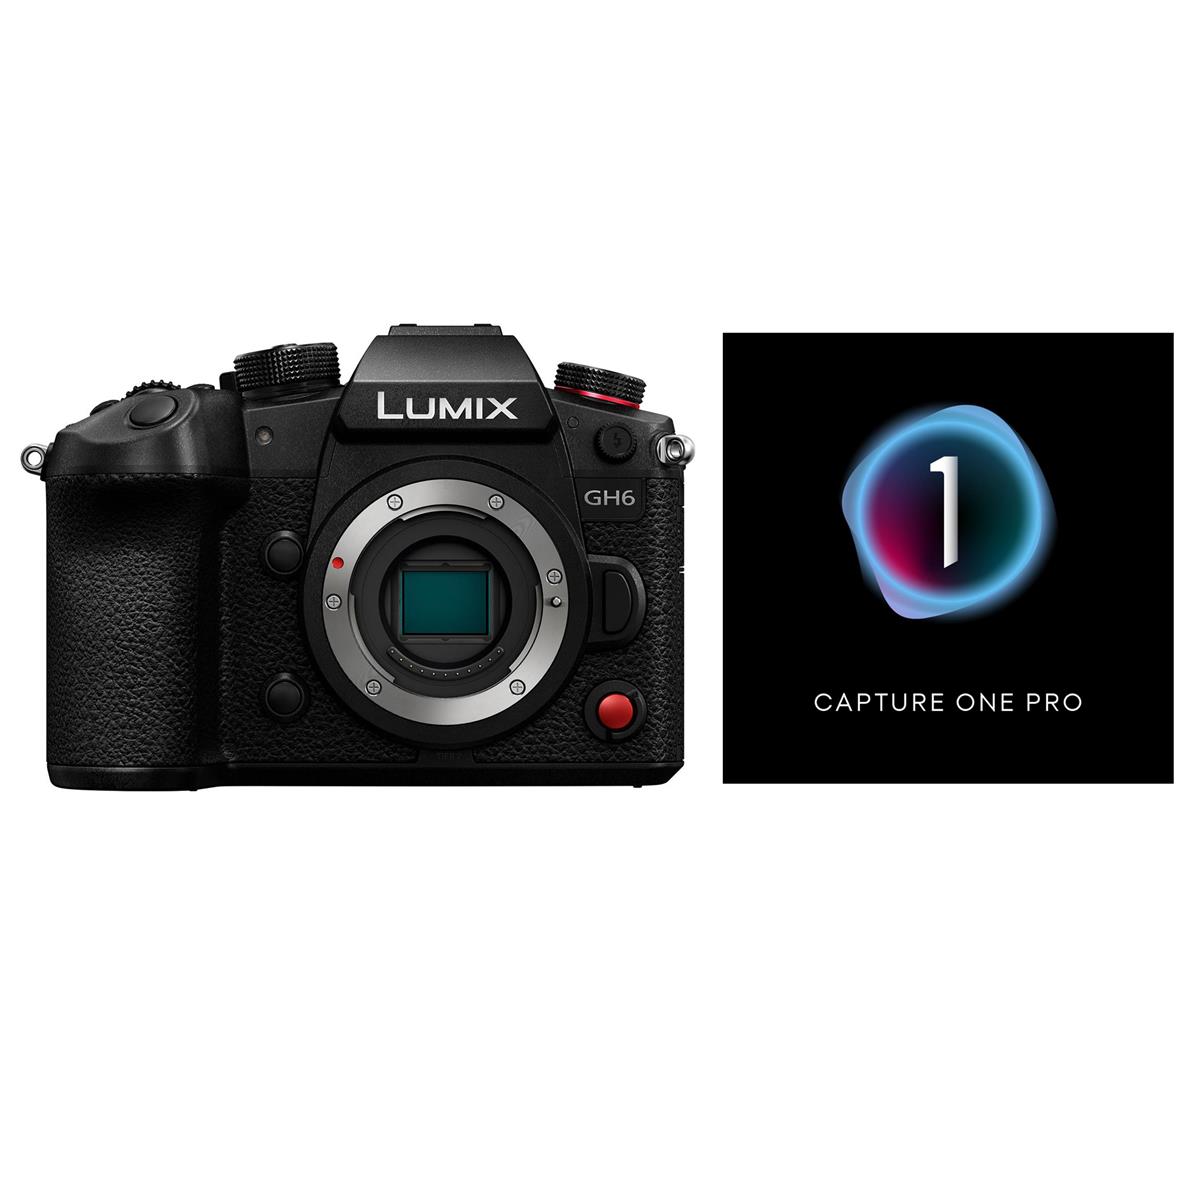 Image of Panasonic Lumix GH6 Mirrorless Camera Body with Capture One Pro